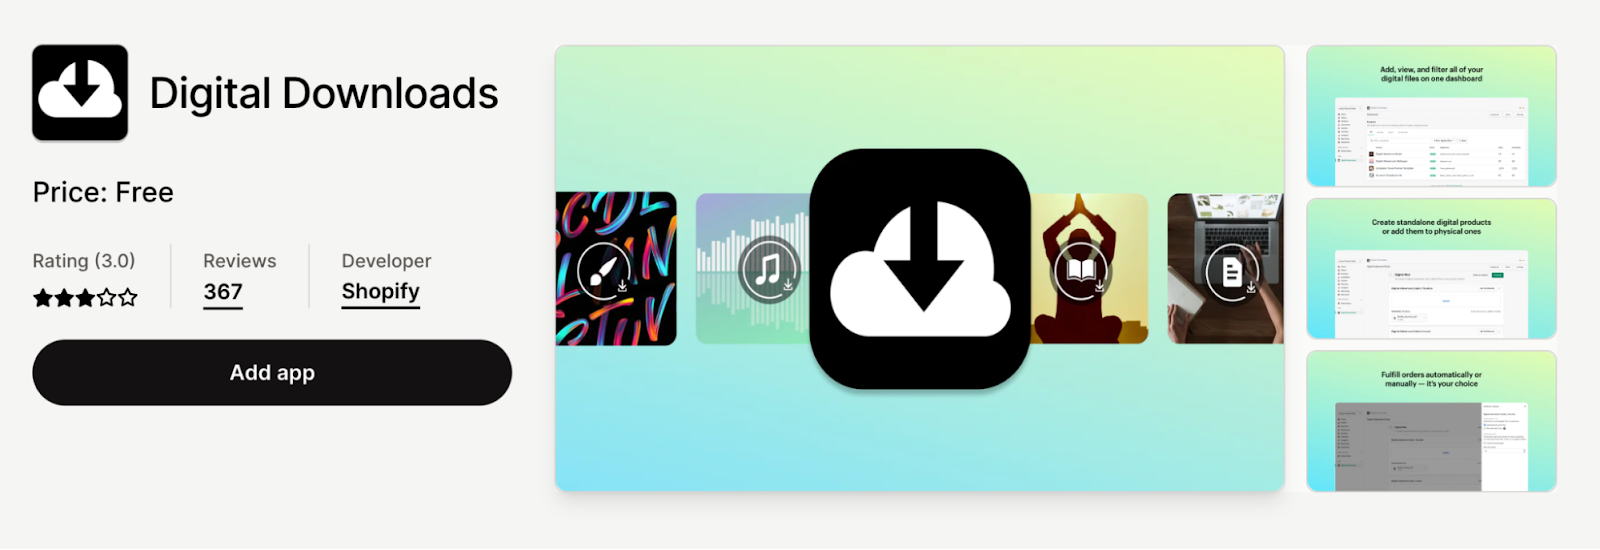 Digital Downloads app in the Shopify app store.